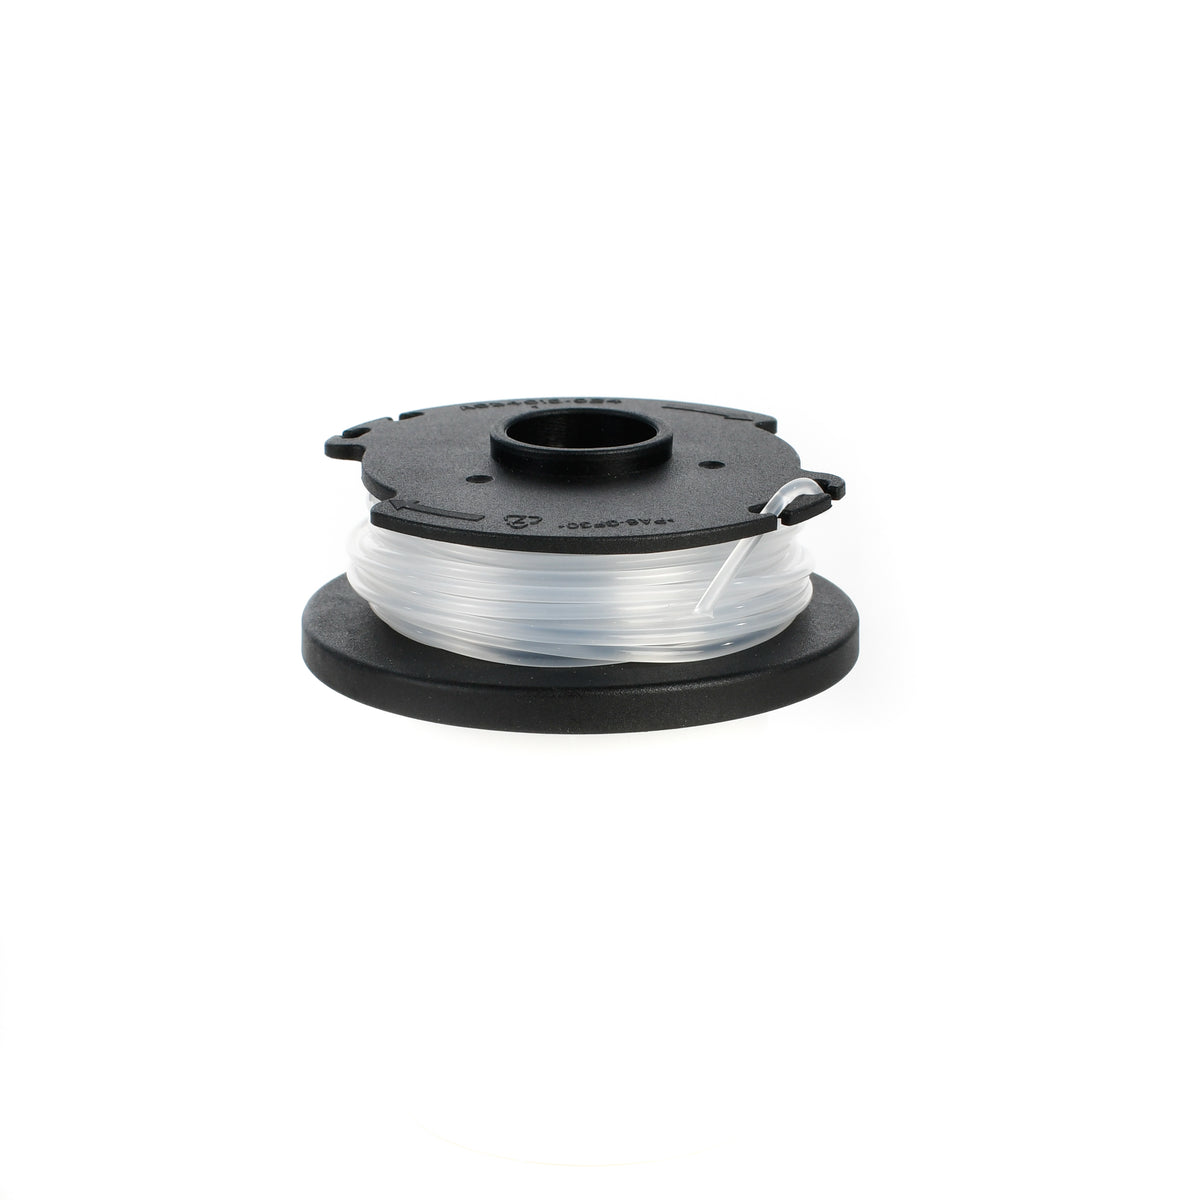  BLACK+DECKER Trimmer Line Replacement Spool, Dual